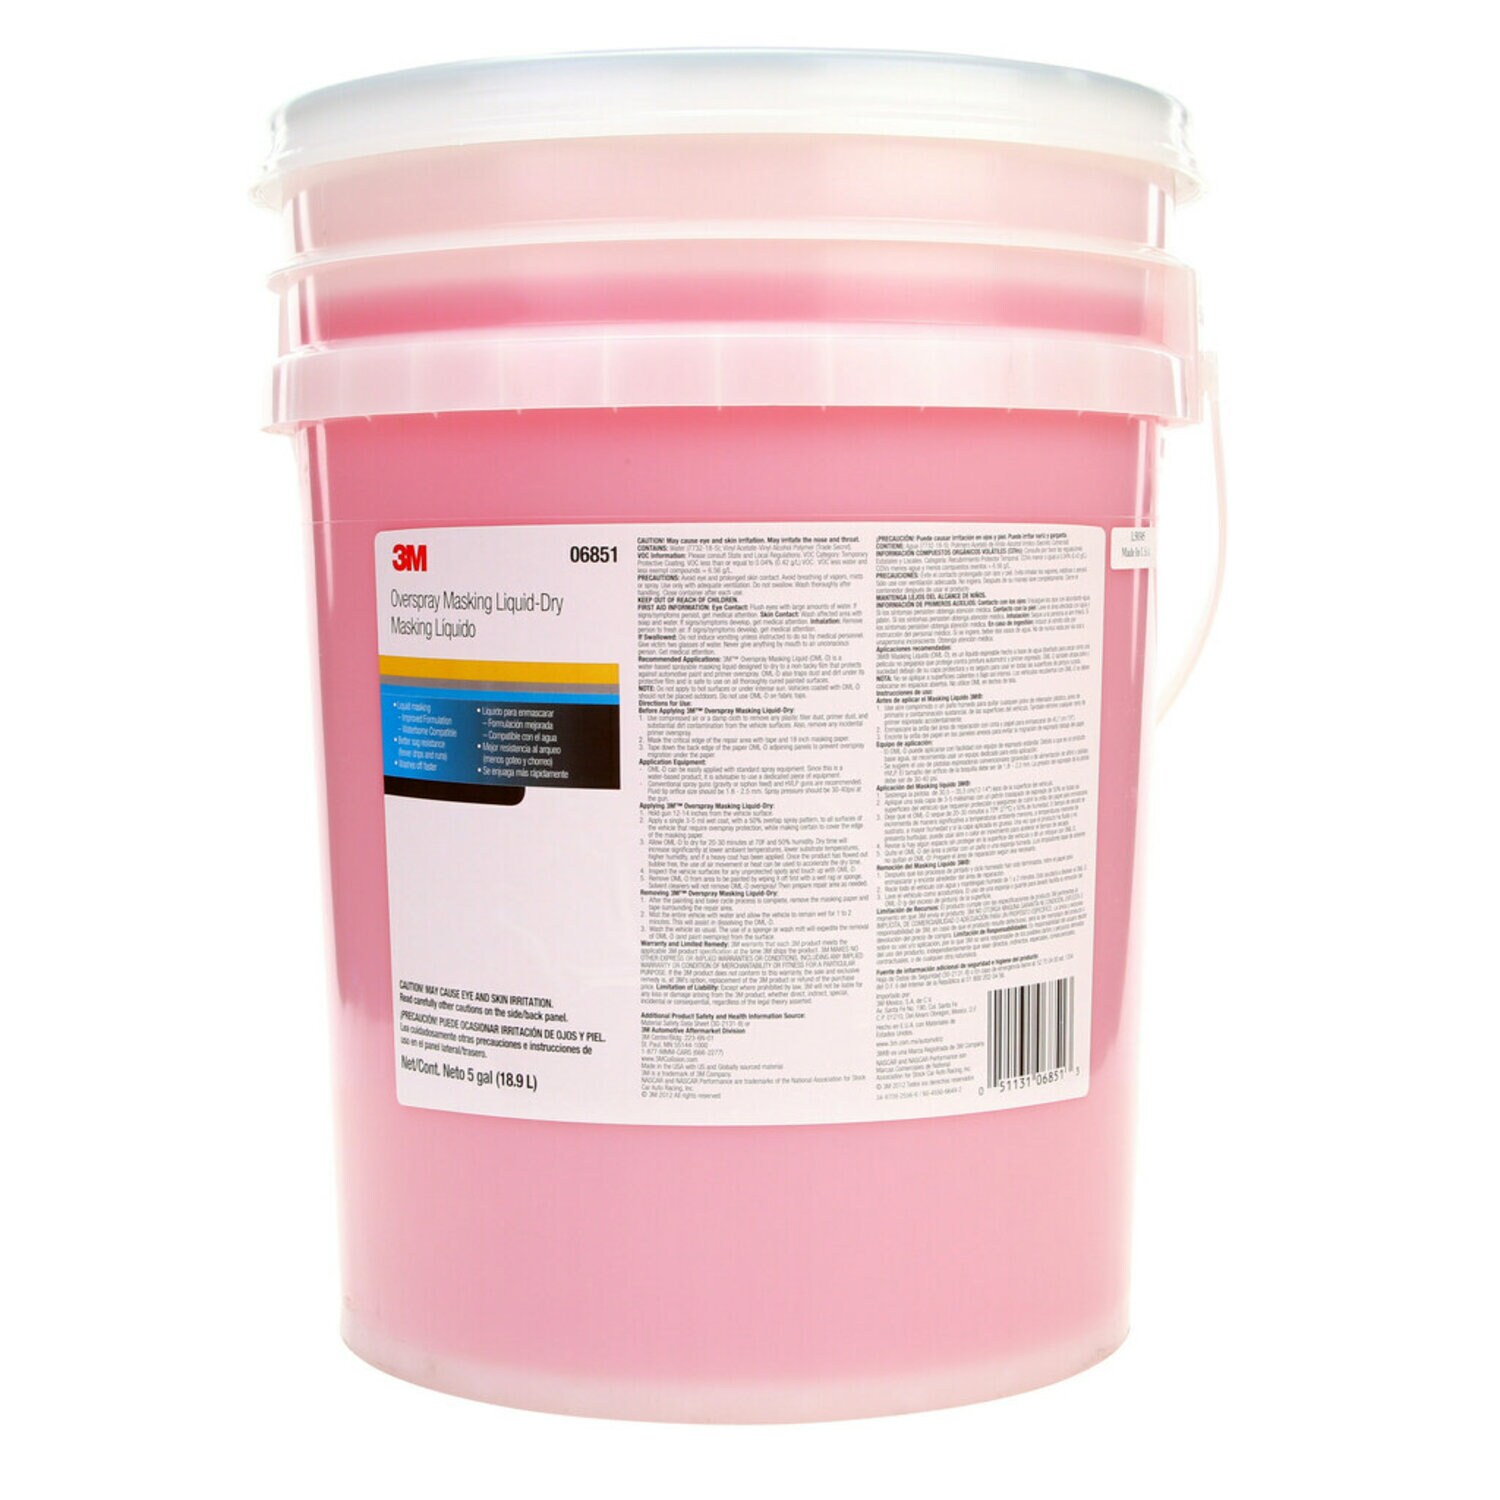 7100136751 - 3M Overspray Masking Liquid Dry, 06851, 5 Gallon, 1 per case